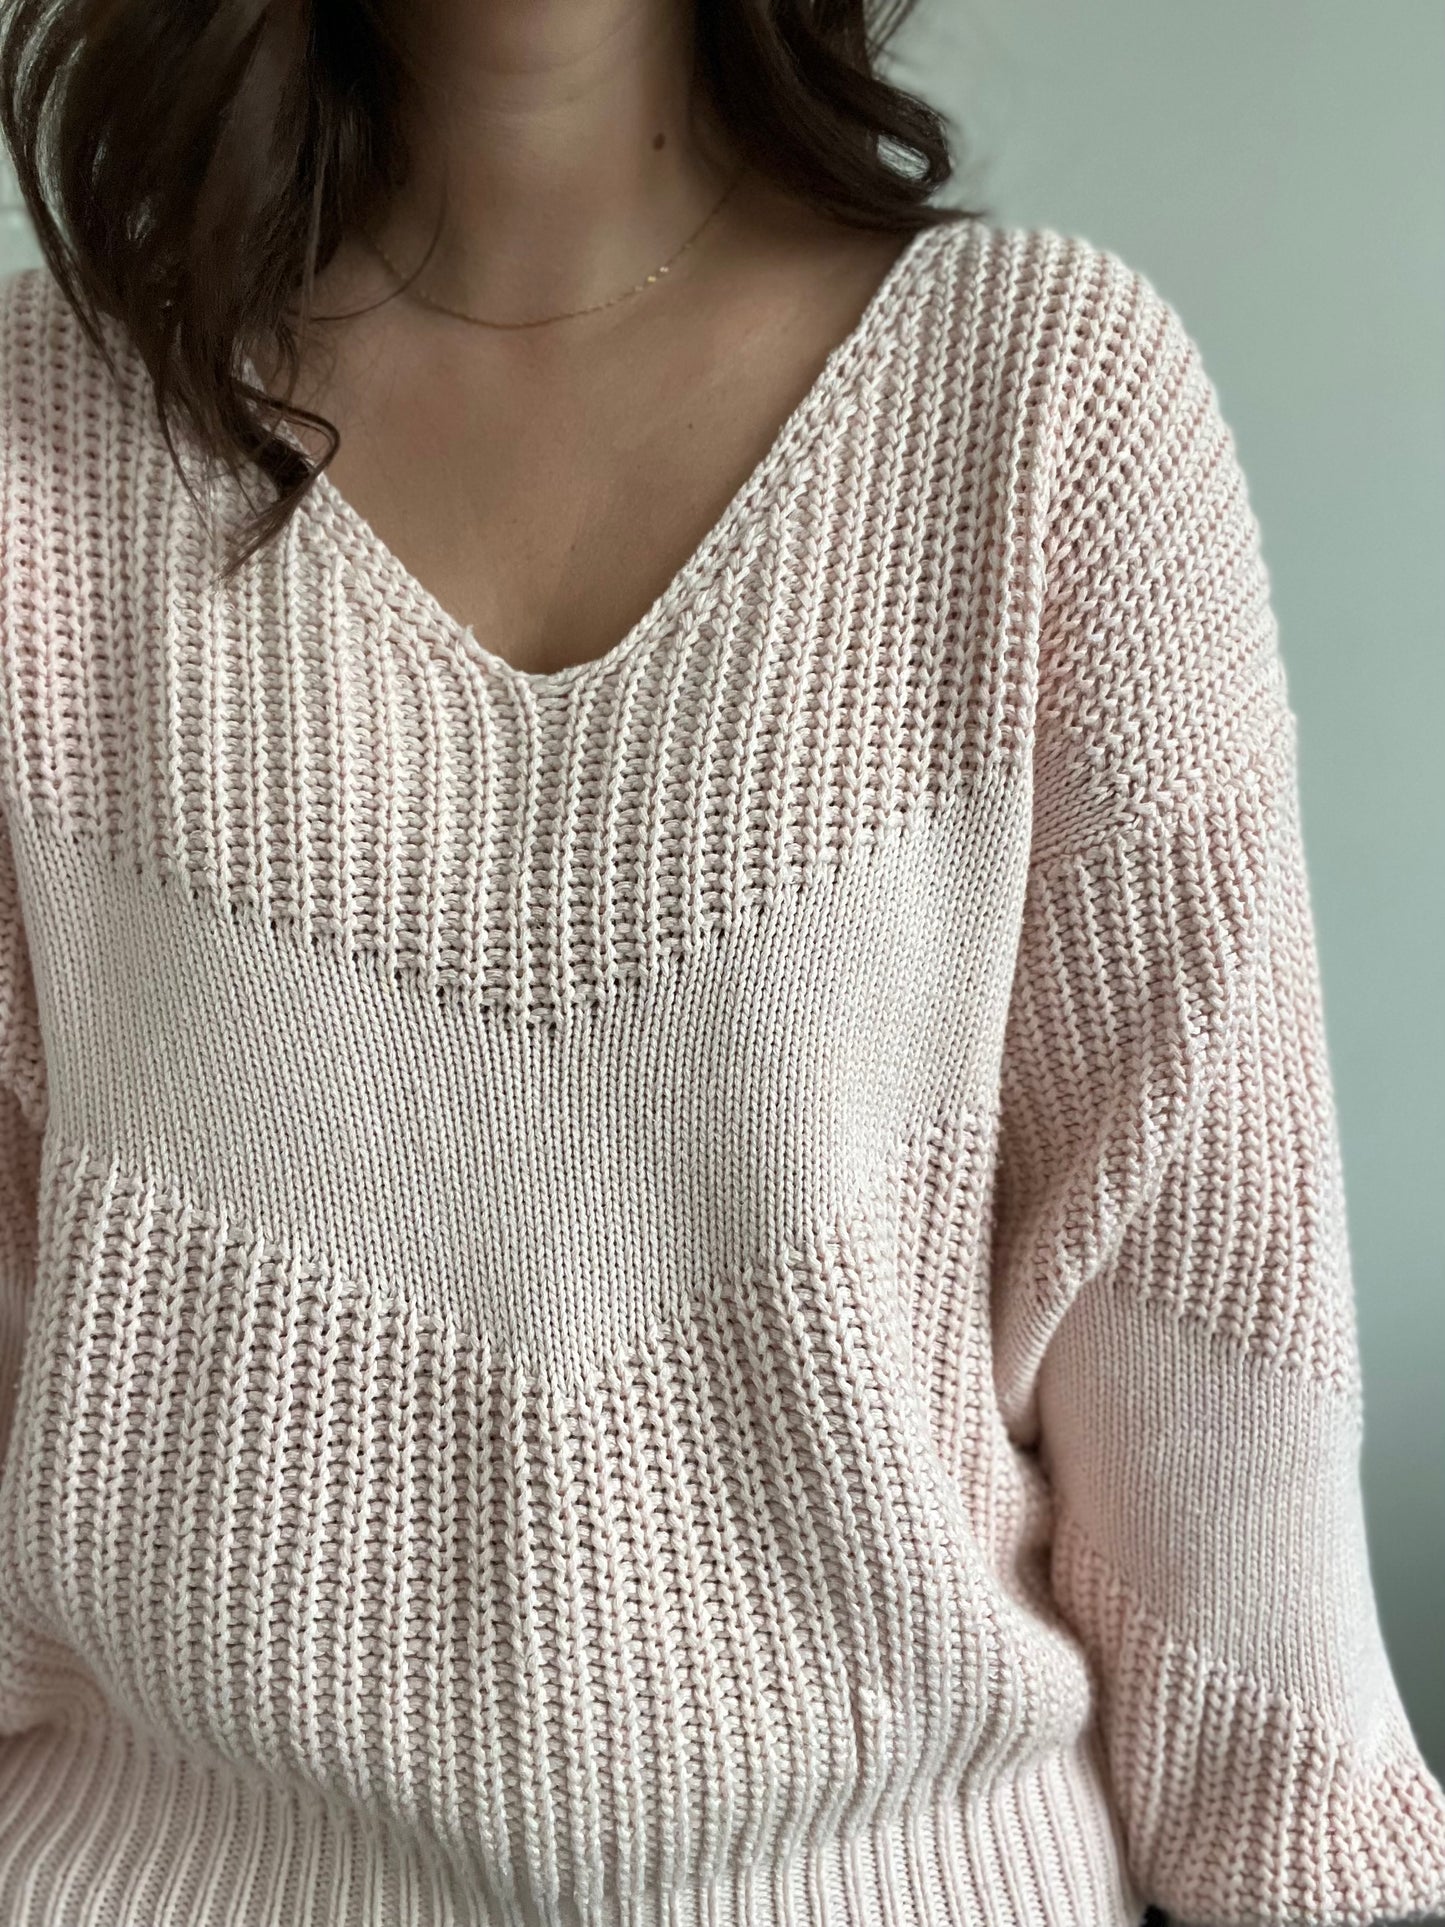 100% Cotton Pink Knit Sweater - Size L